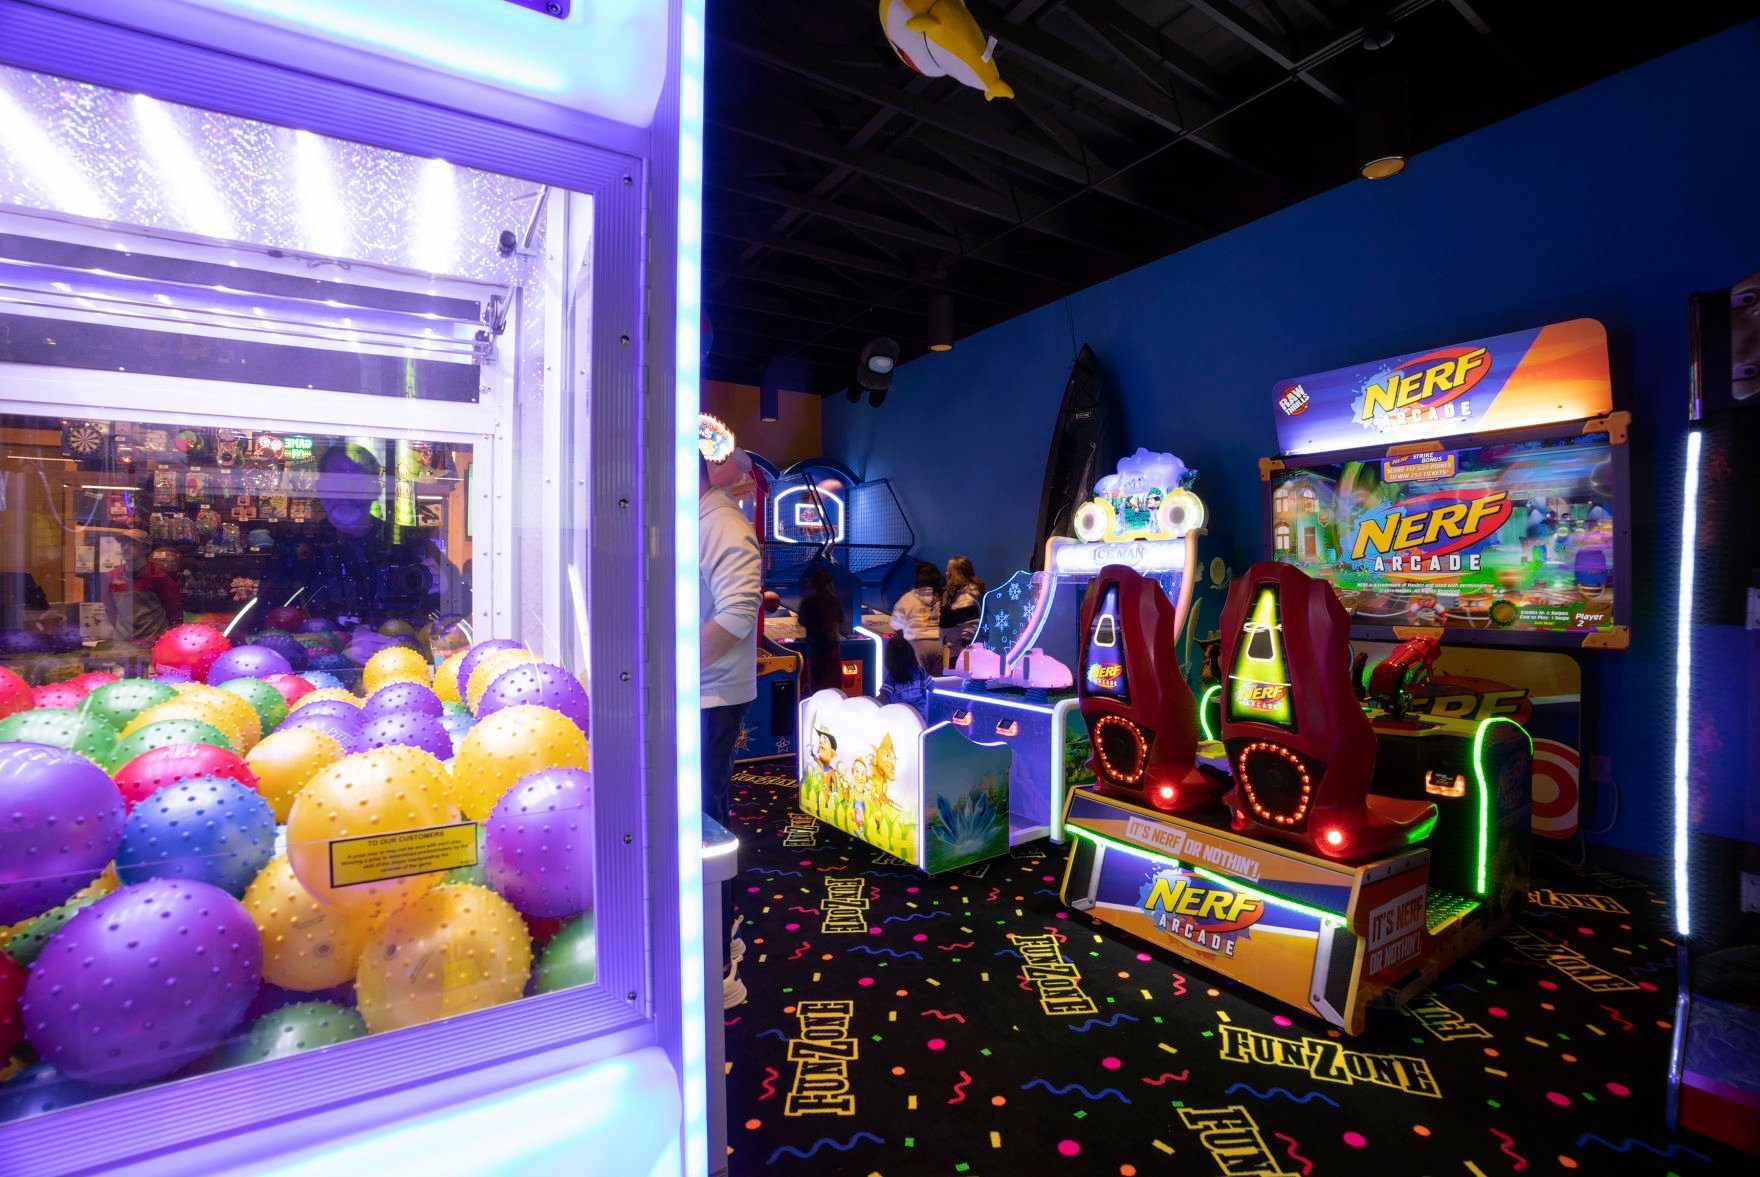 Interior of Pizza Ranch’s new FunZone arcade in Dubuque.    PHOTO CREDIT: Stephen Gassman